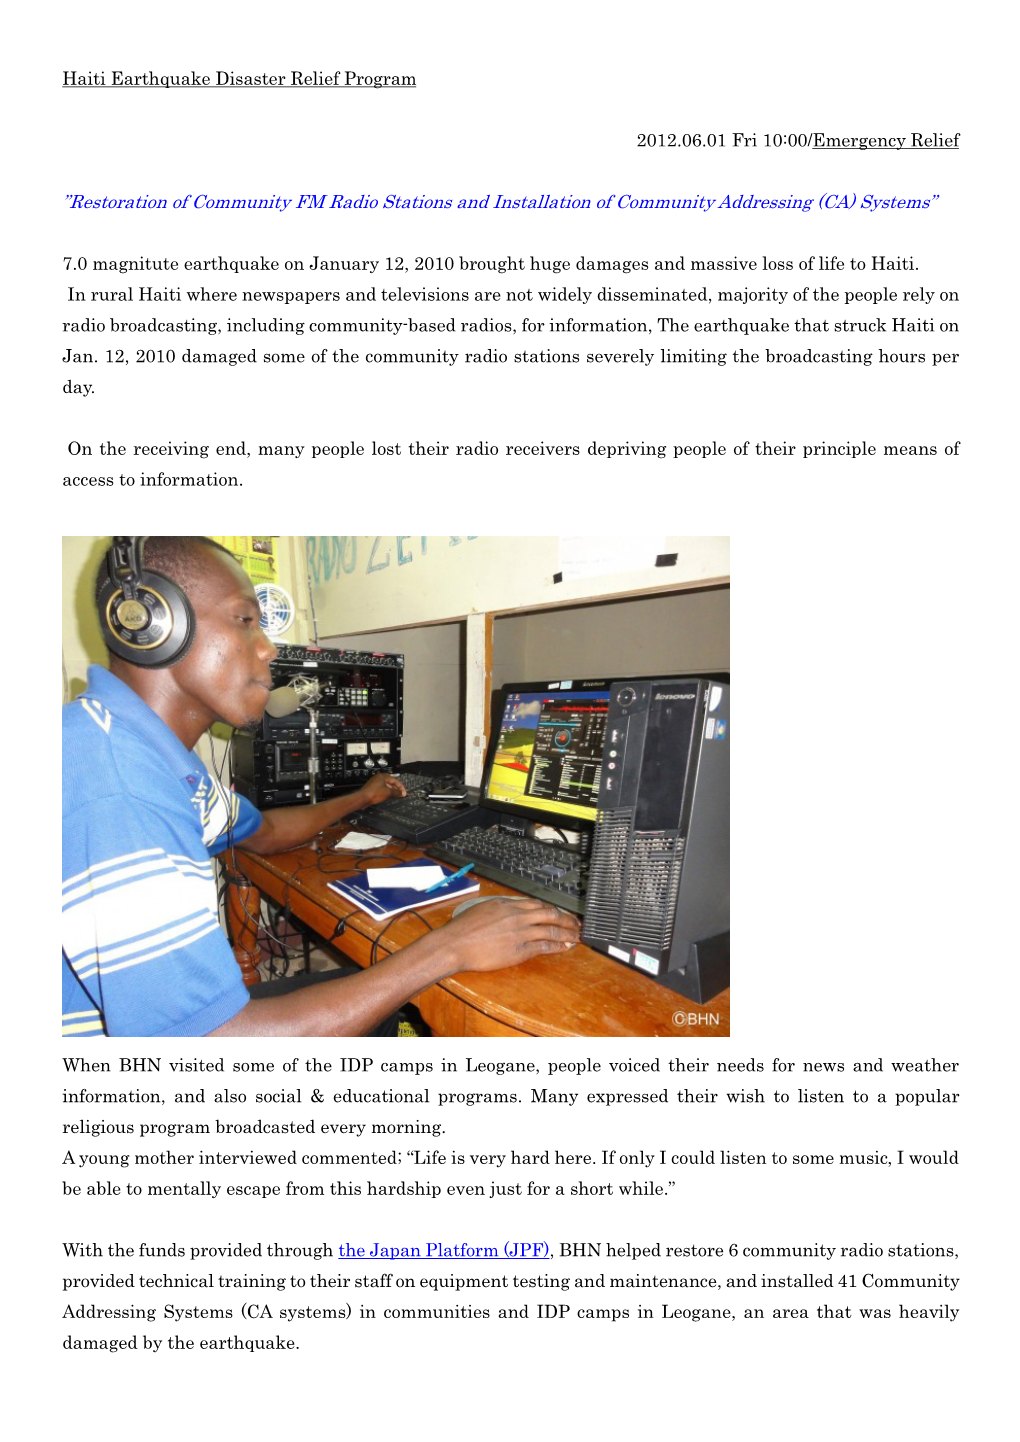 Restoration of Community FM Radio Stations and Installation of Community Addressing (CA) Systems”